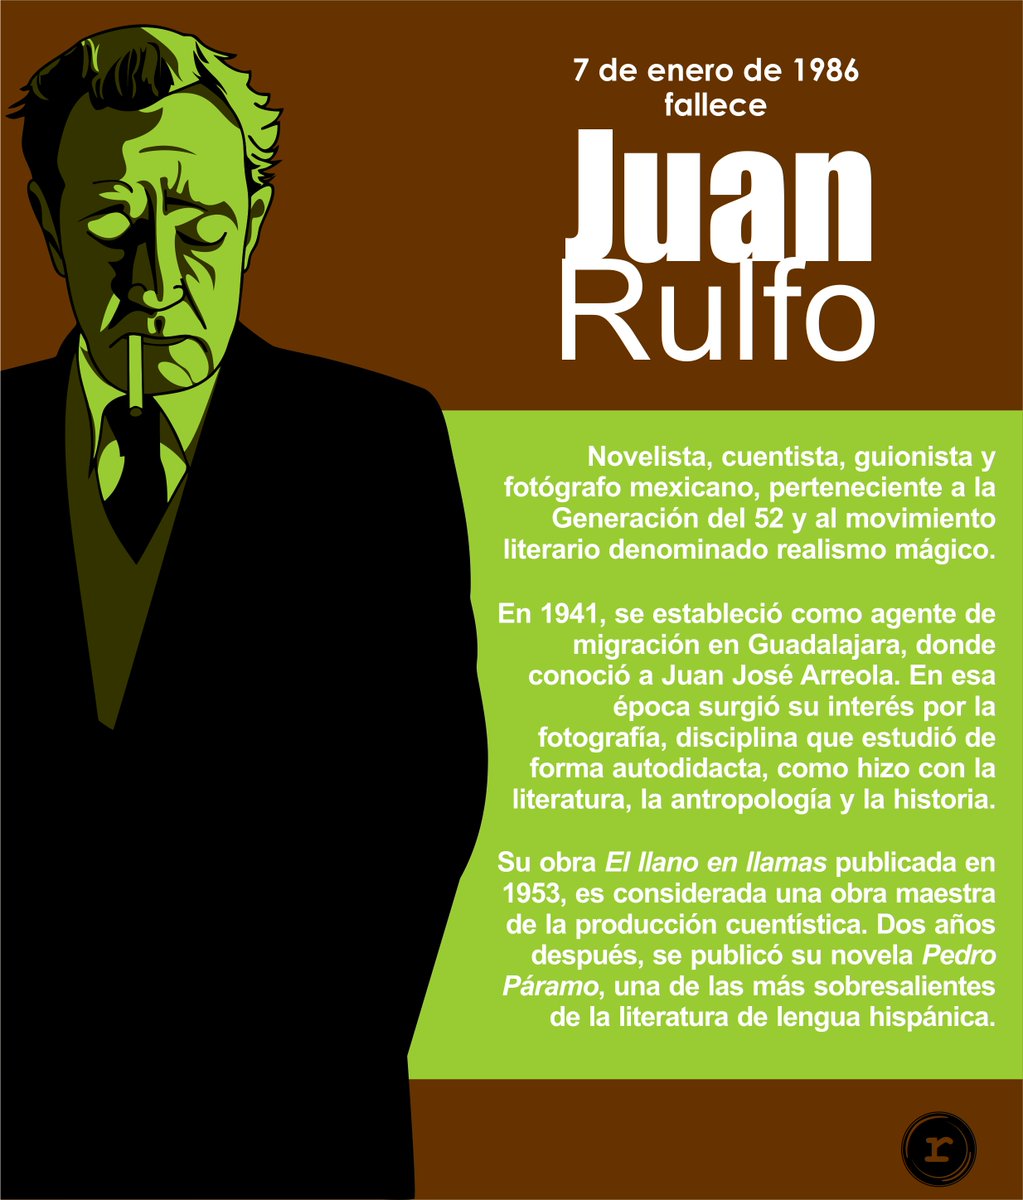 #JuanRulfo #literatura #escritoresmexicanos #pedroparamo #ElLlanoEnLlamas